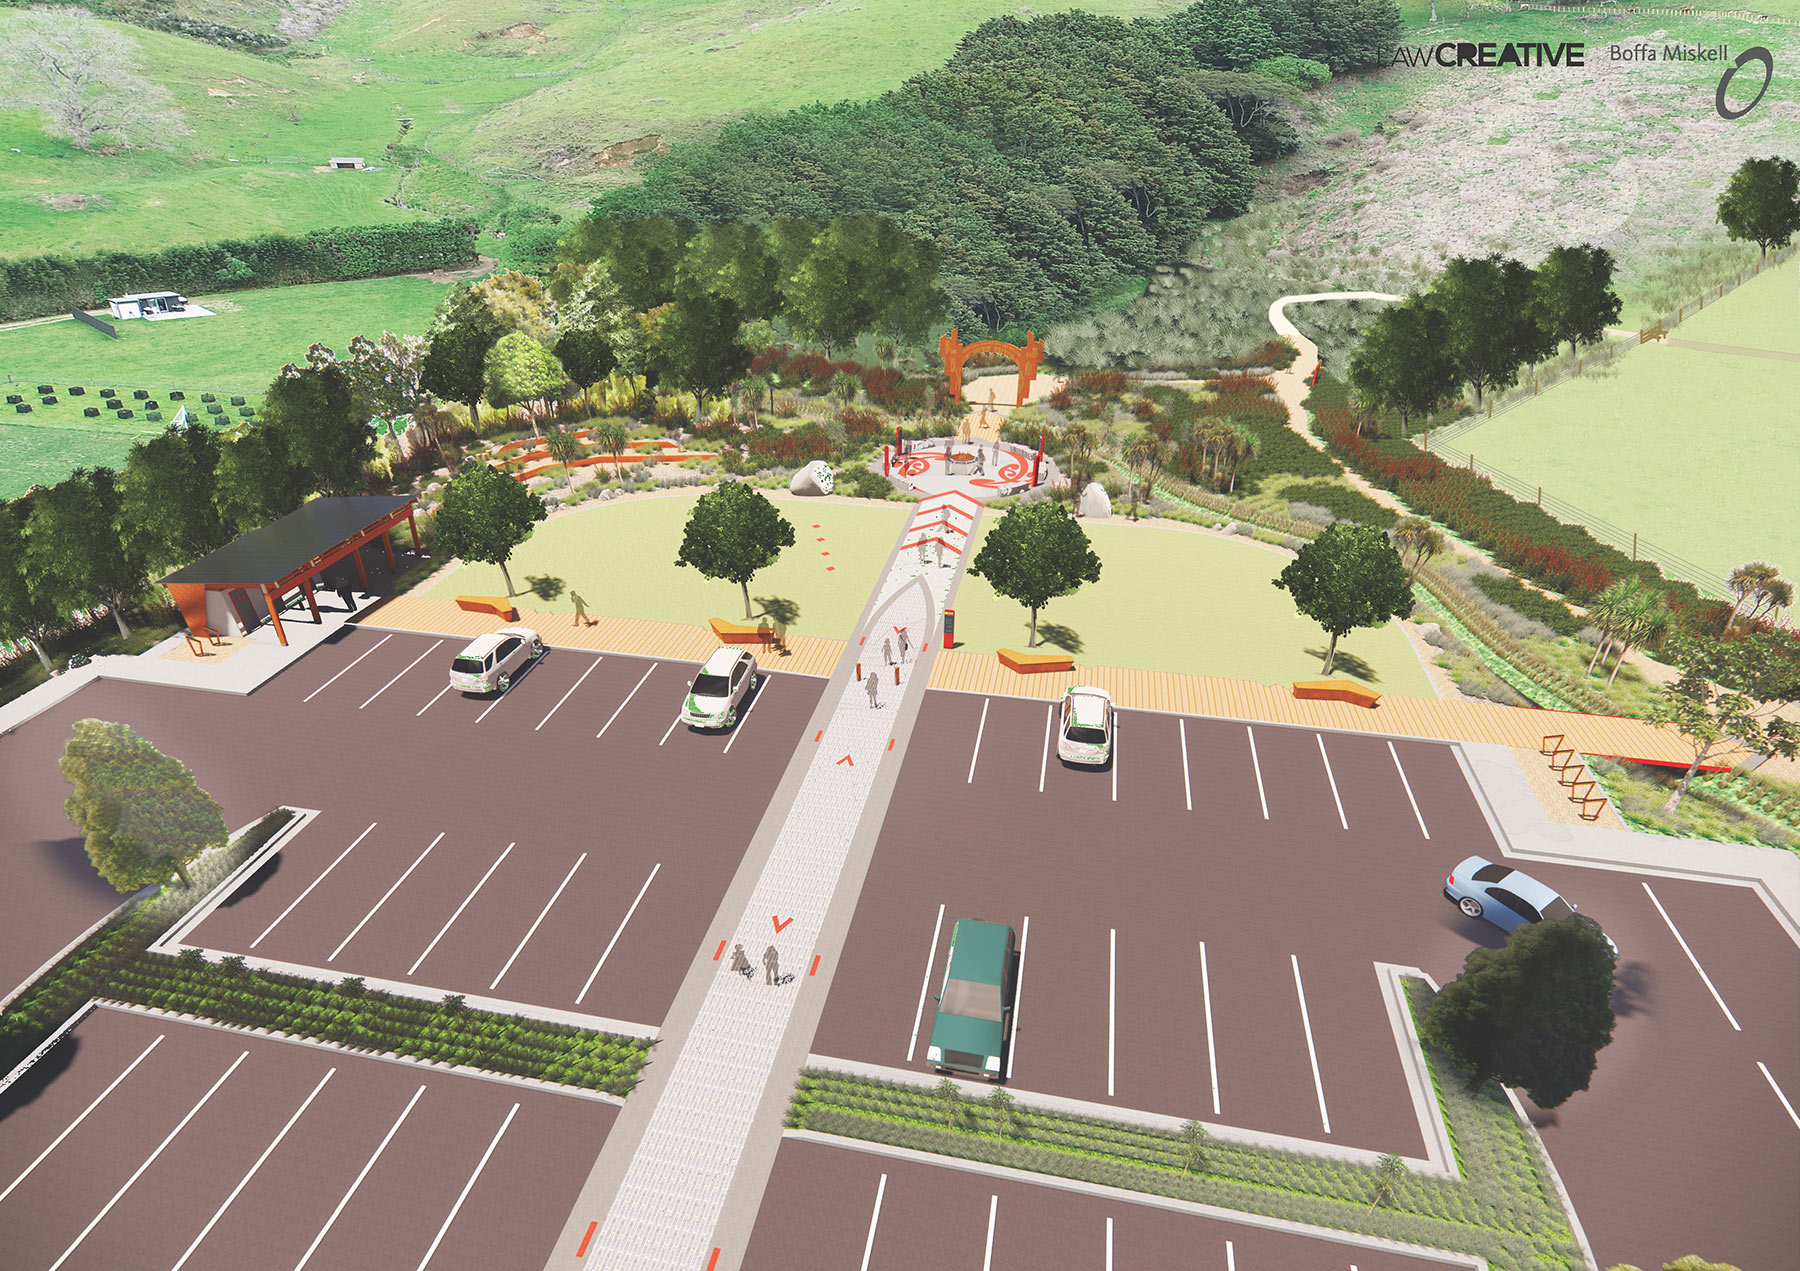 Pāpāmoa Hills upgrade - new car park design concep